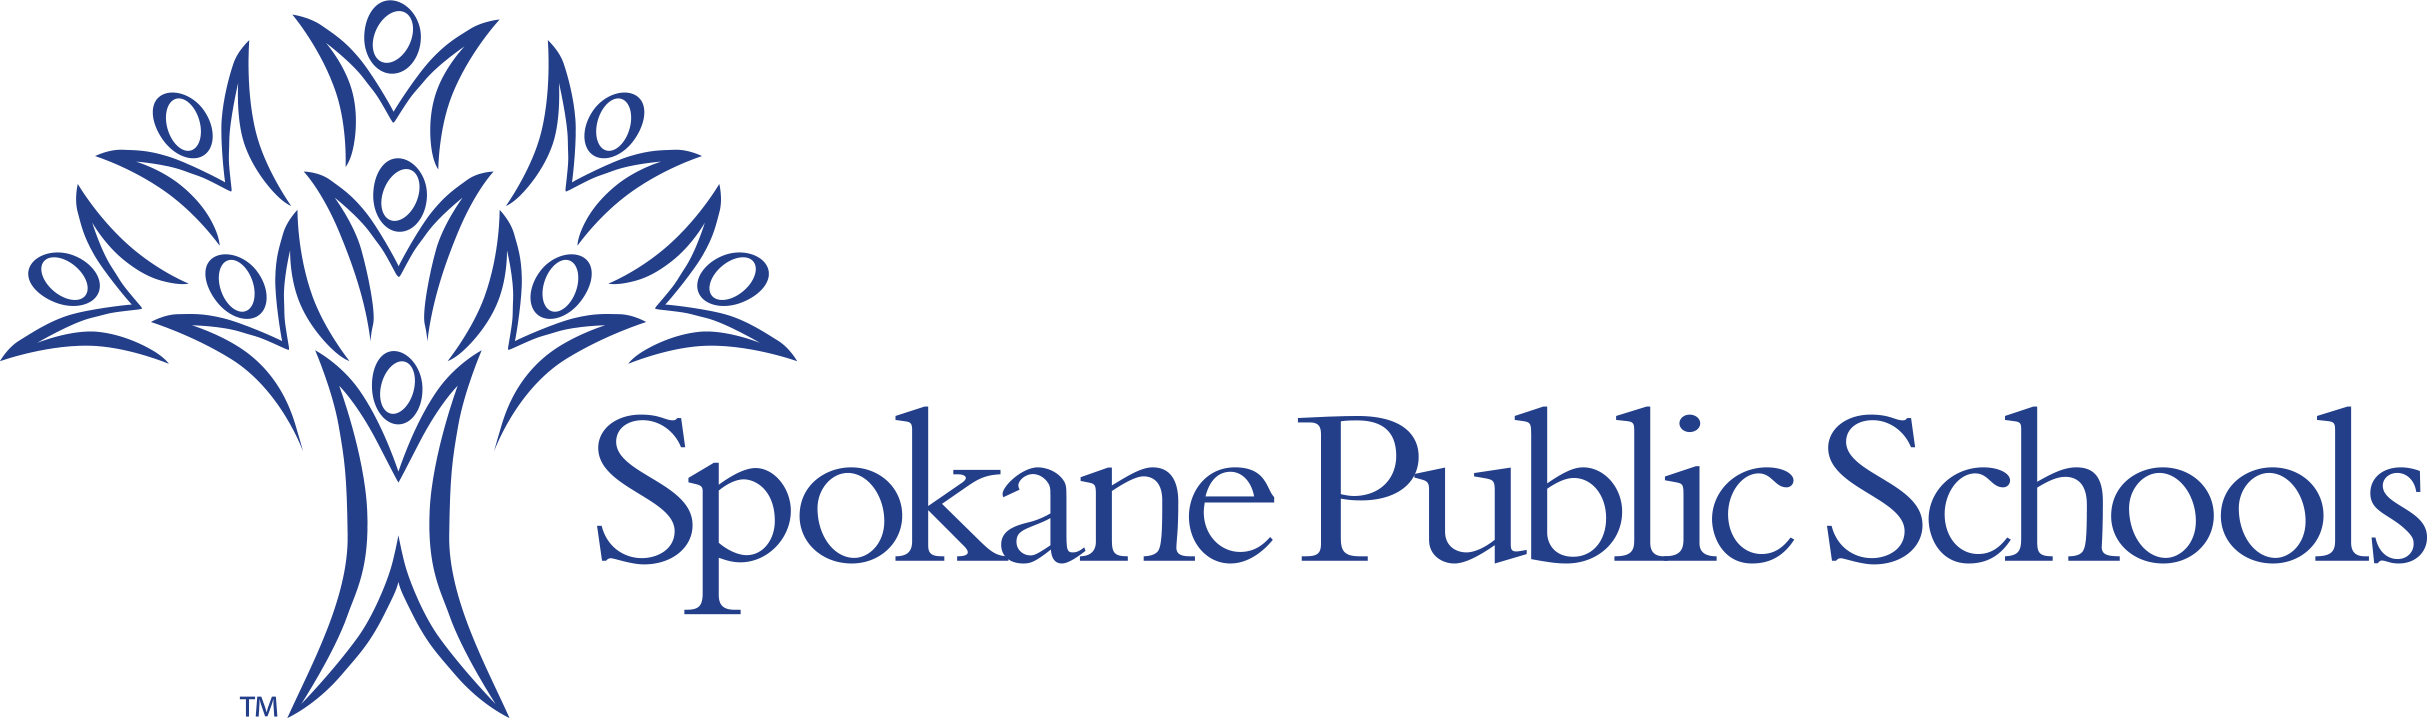 Spokane Public Schools logo